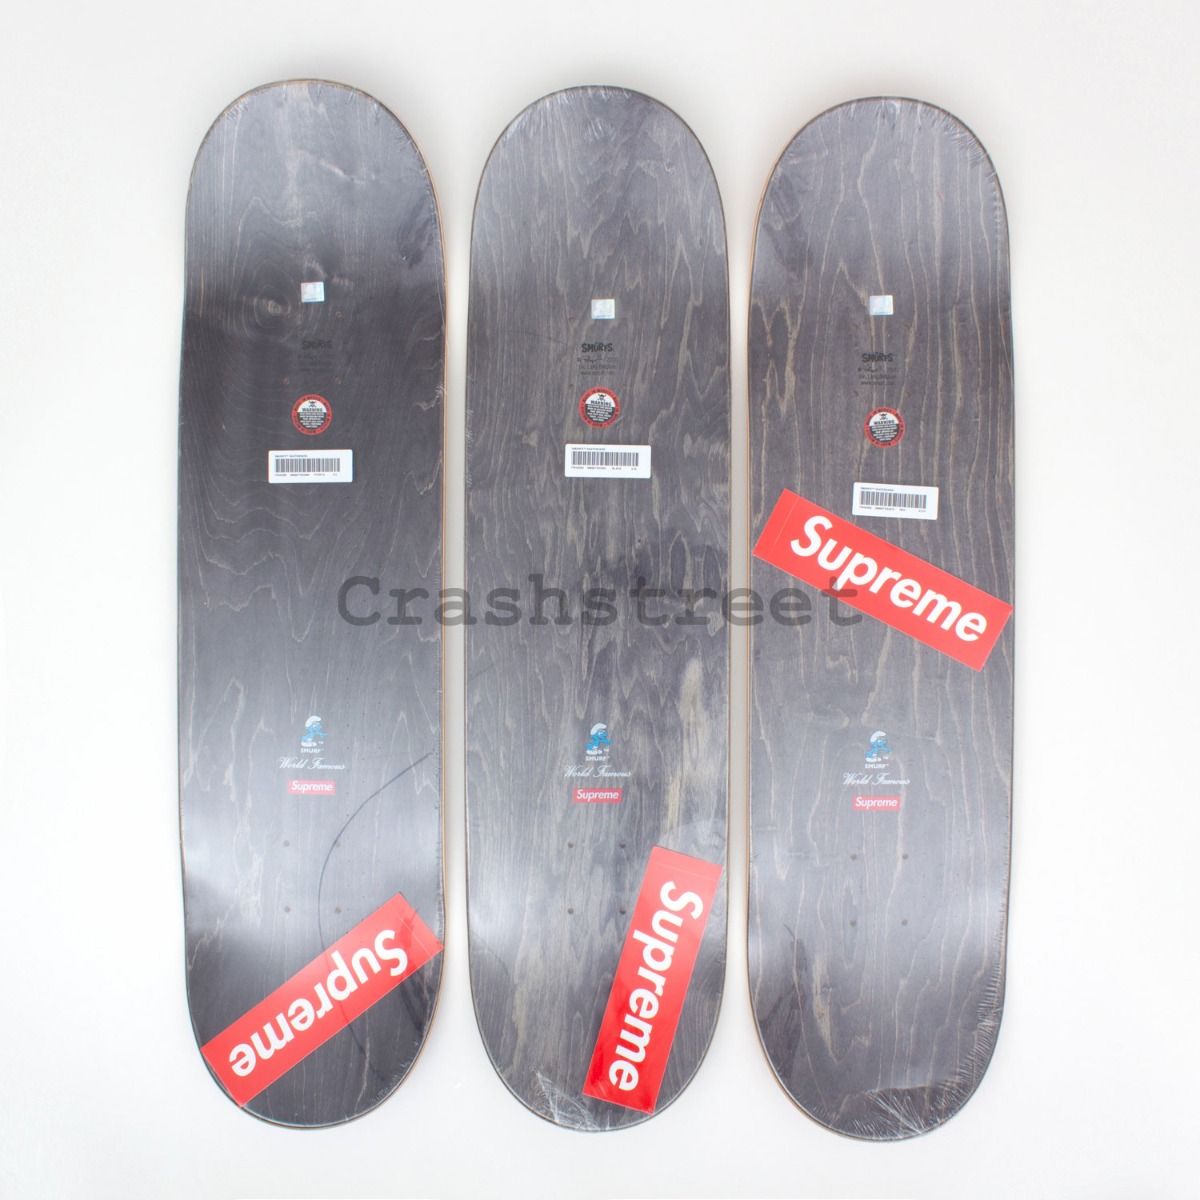 Smurfs Skateboard (Set Of 3)